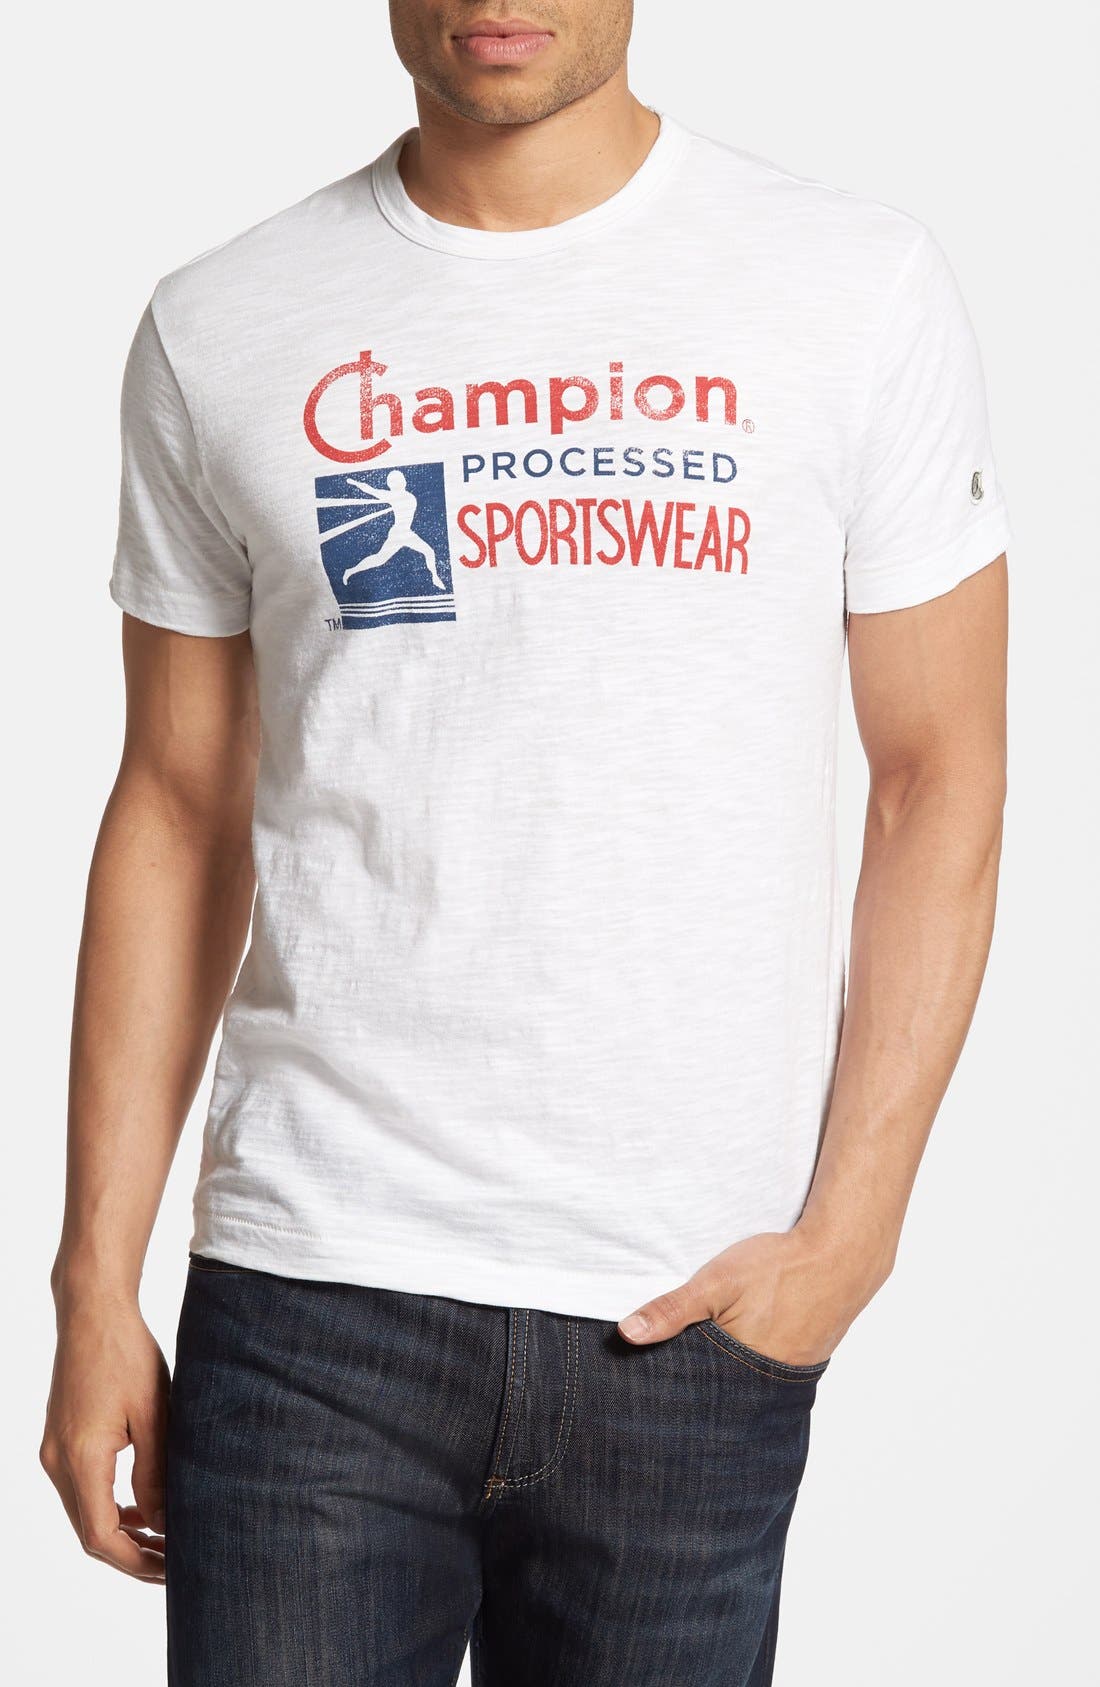 champion todd snyder t shirt